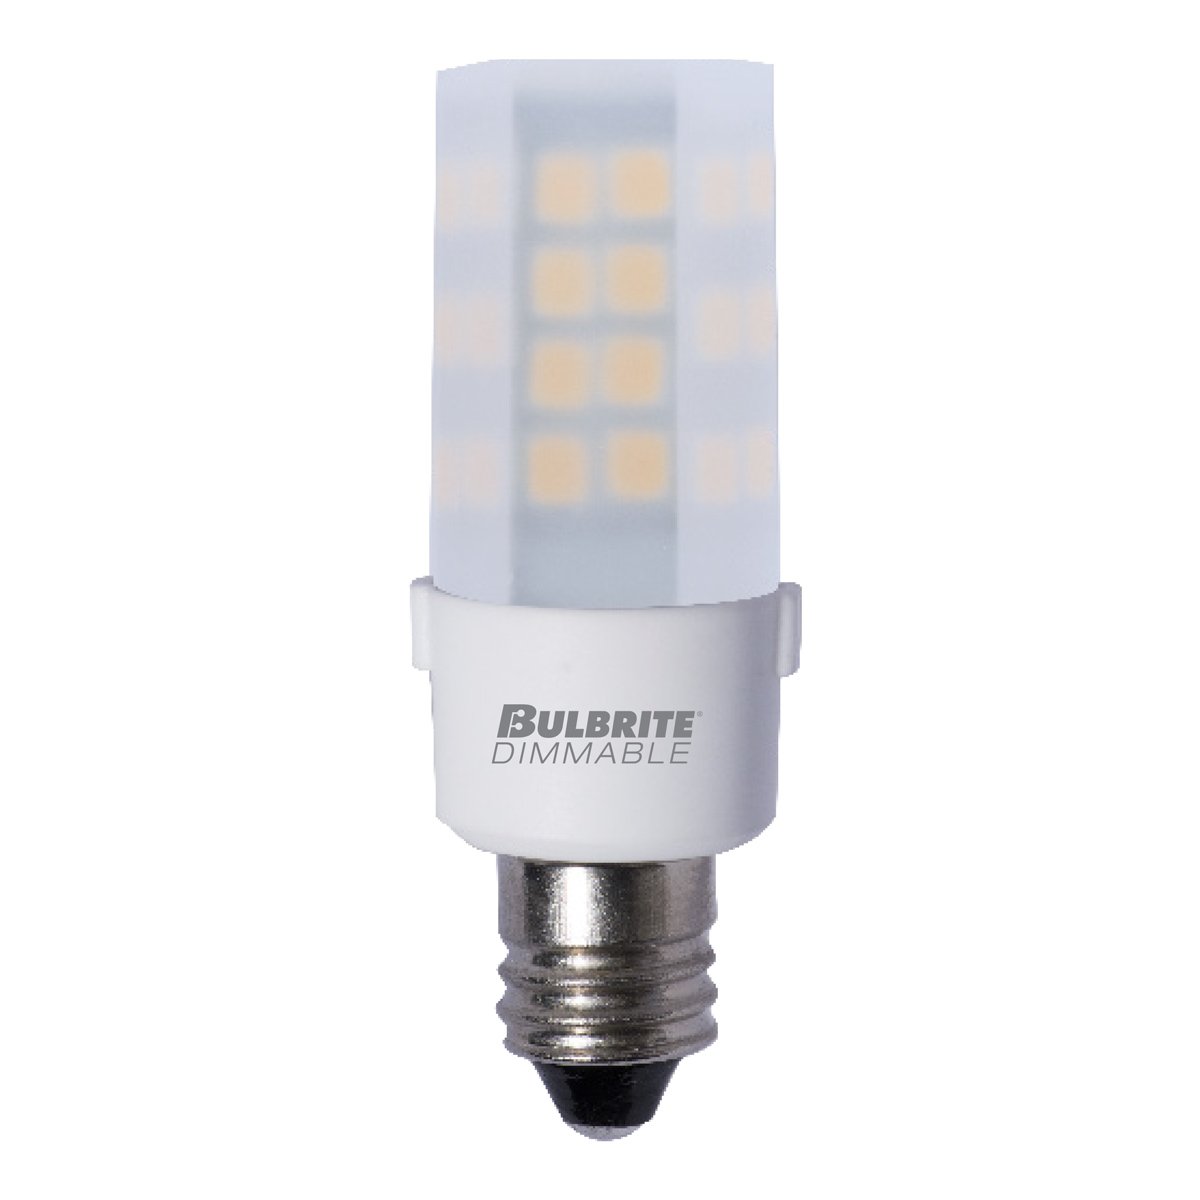 BULBRITE LED T4 MINI-CANDELABRA SCREW (E11) 4.5W DIMMABLE LIGHT BULB FROST 3000K/SOFT WHITE 35W INCANDESCENT EQUIVALENT 2PK (770582)